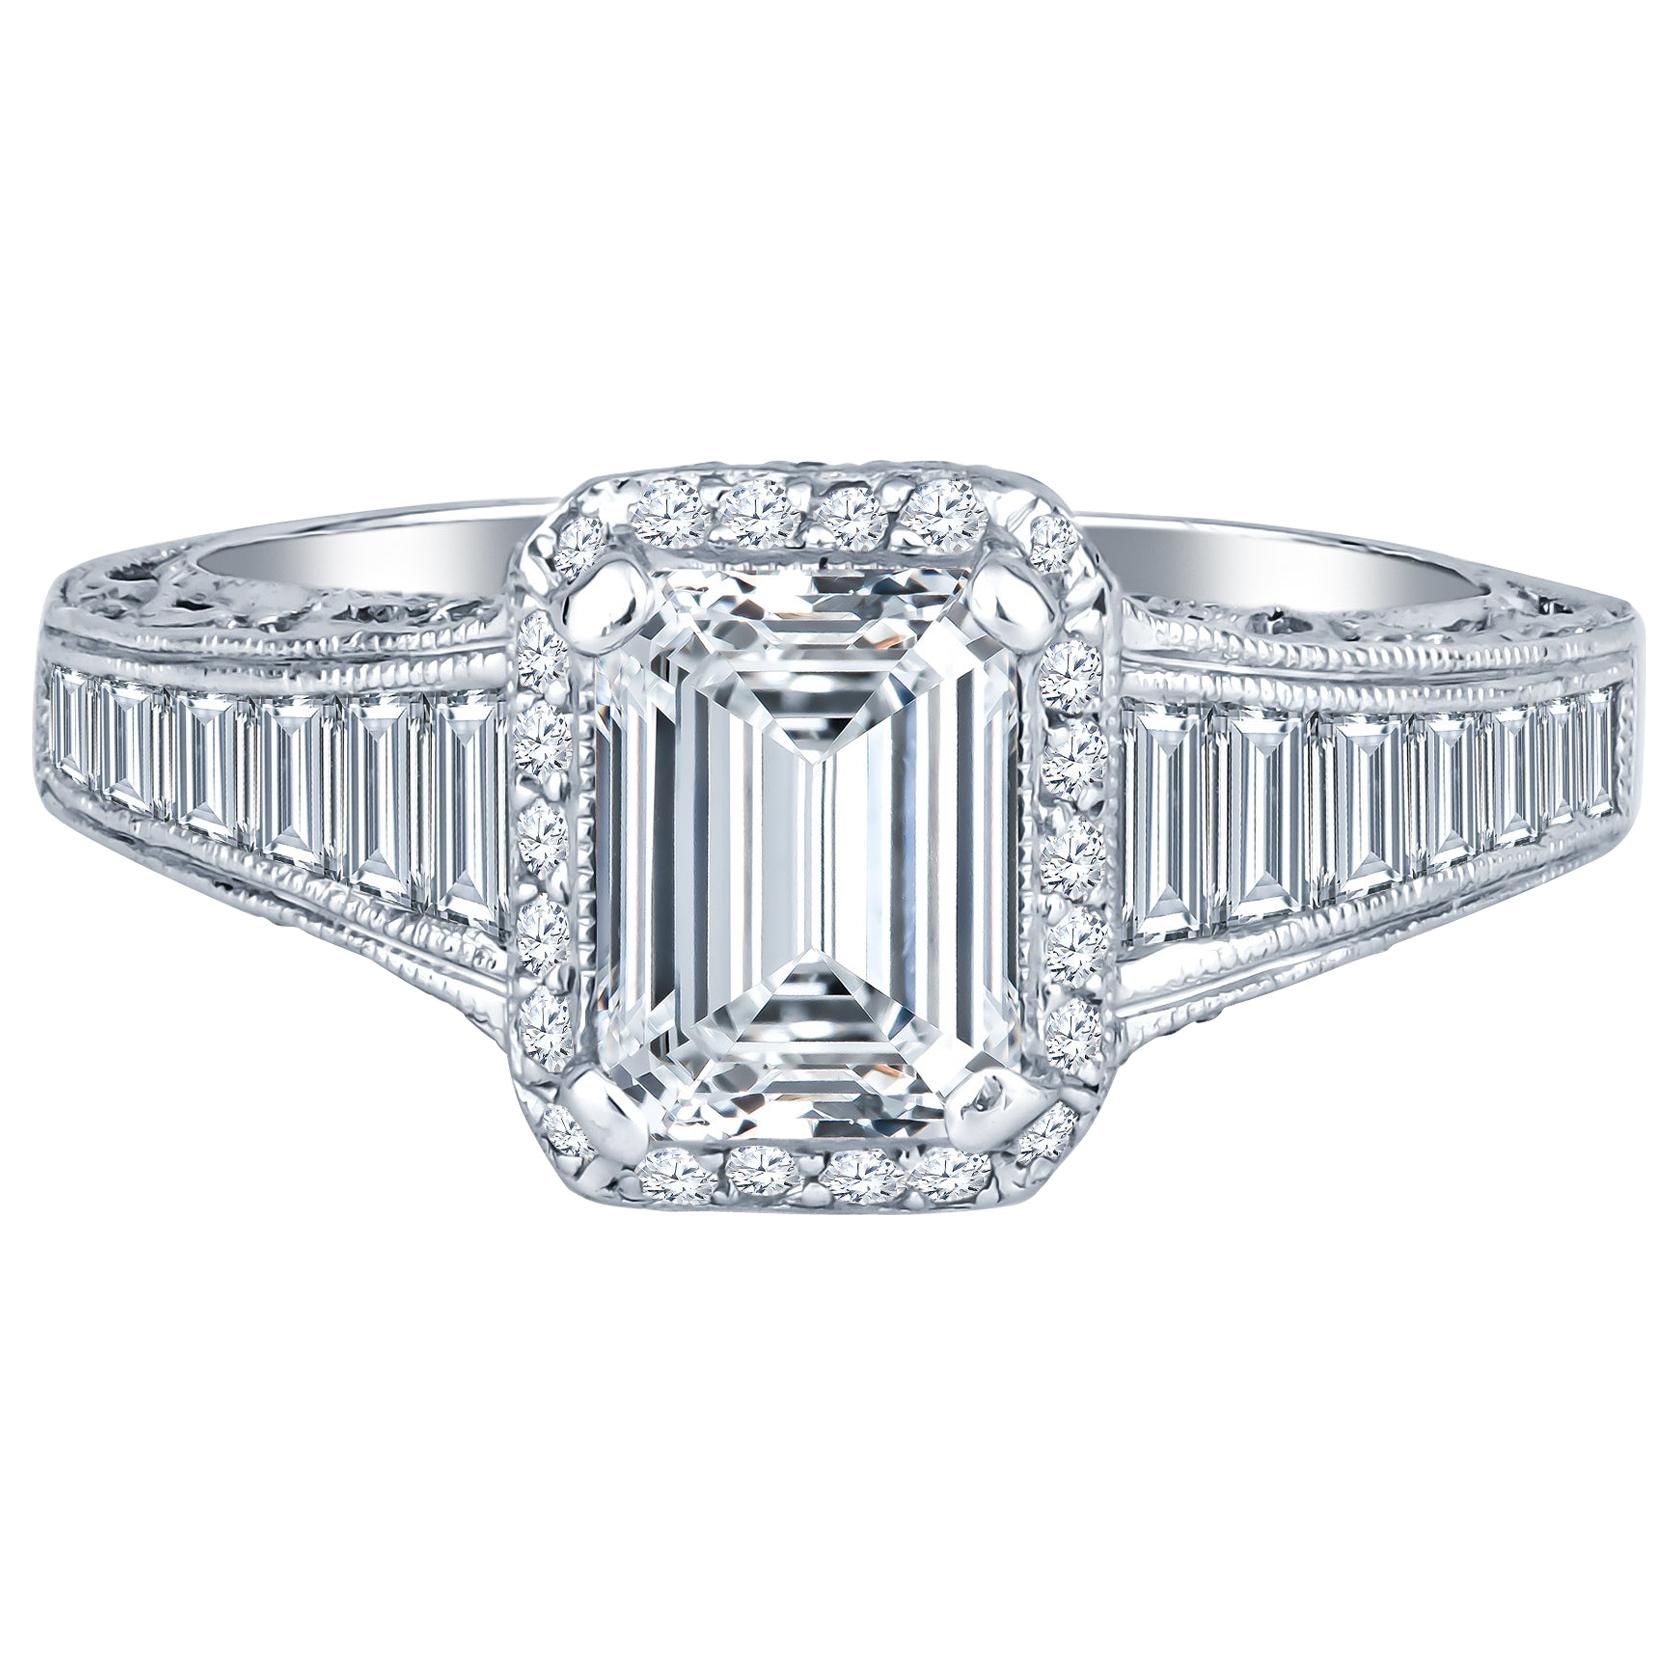 Tacori 1.01 Emerald Cut Ring with 1.35 Carat in Side Diamond, GIA Certified